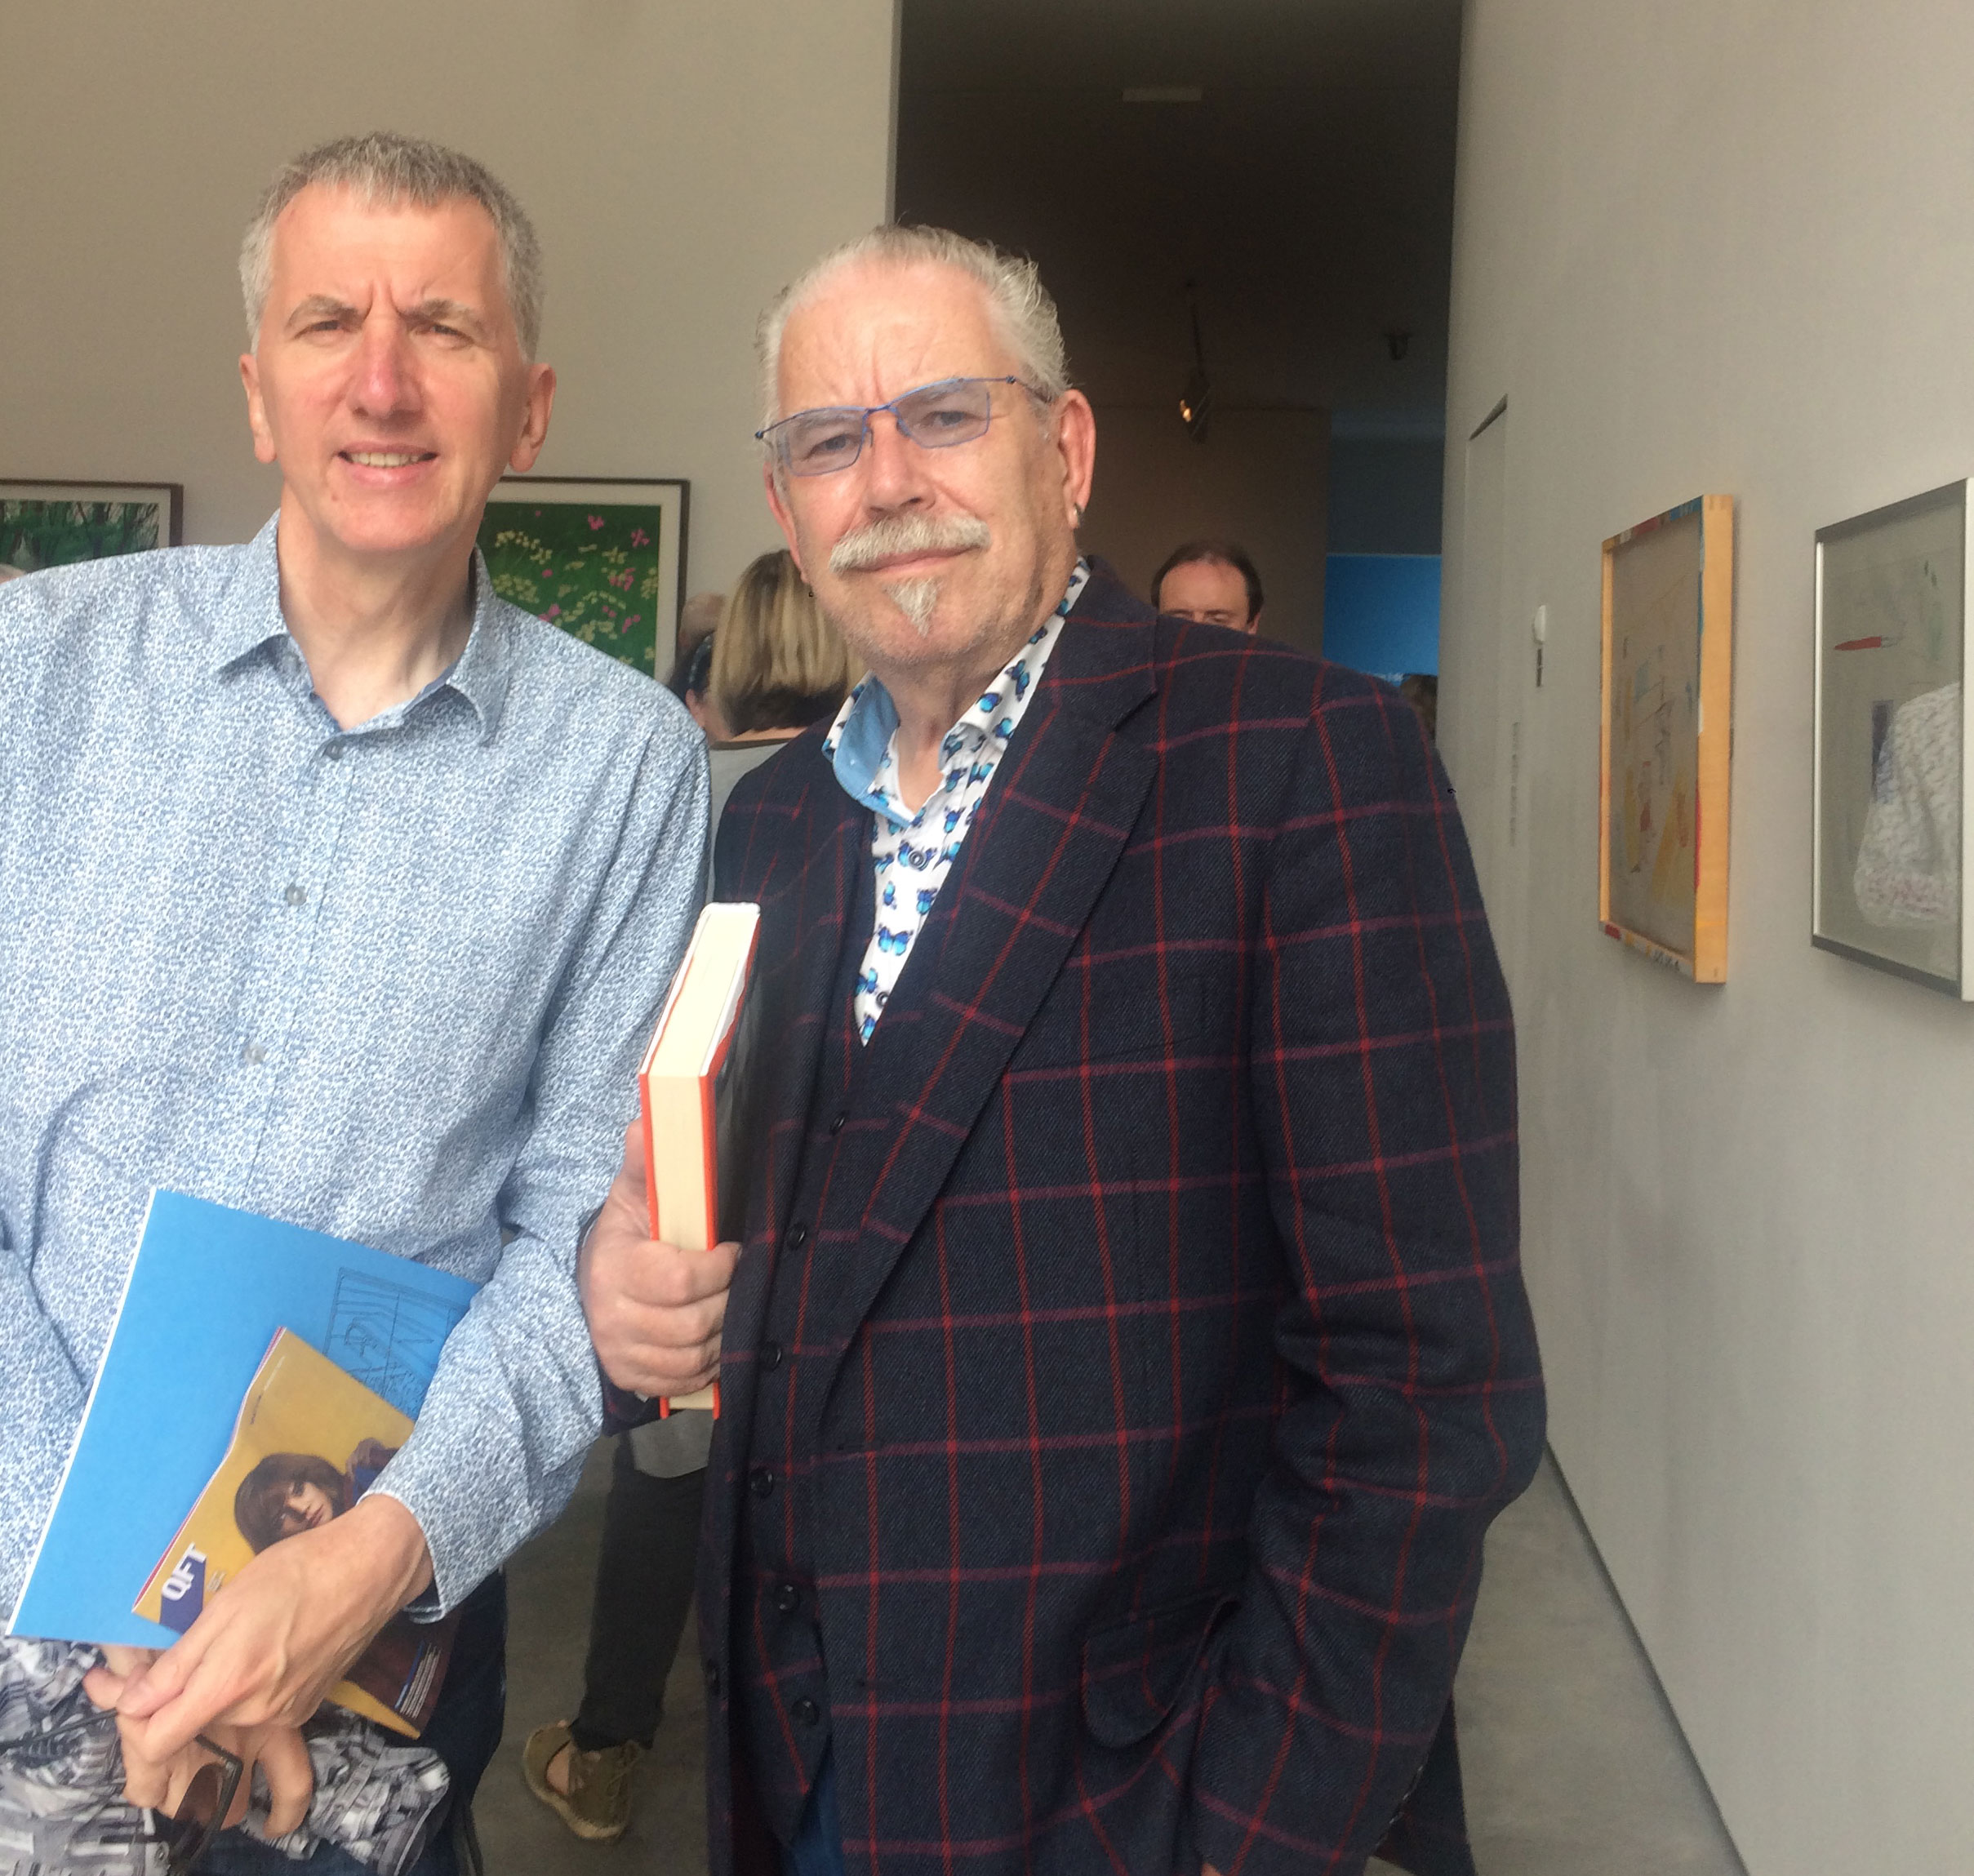 In The Belfast MAC with Robert Ballagh enjoying the spirited Hockney exhibition 